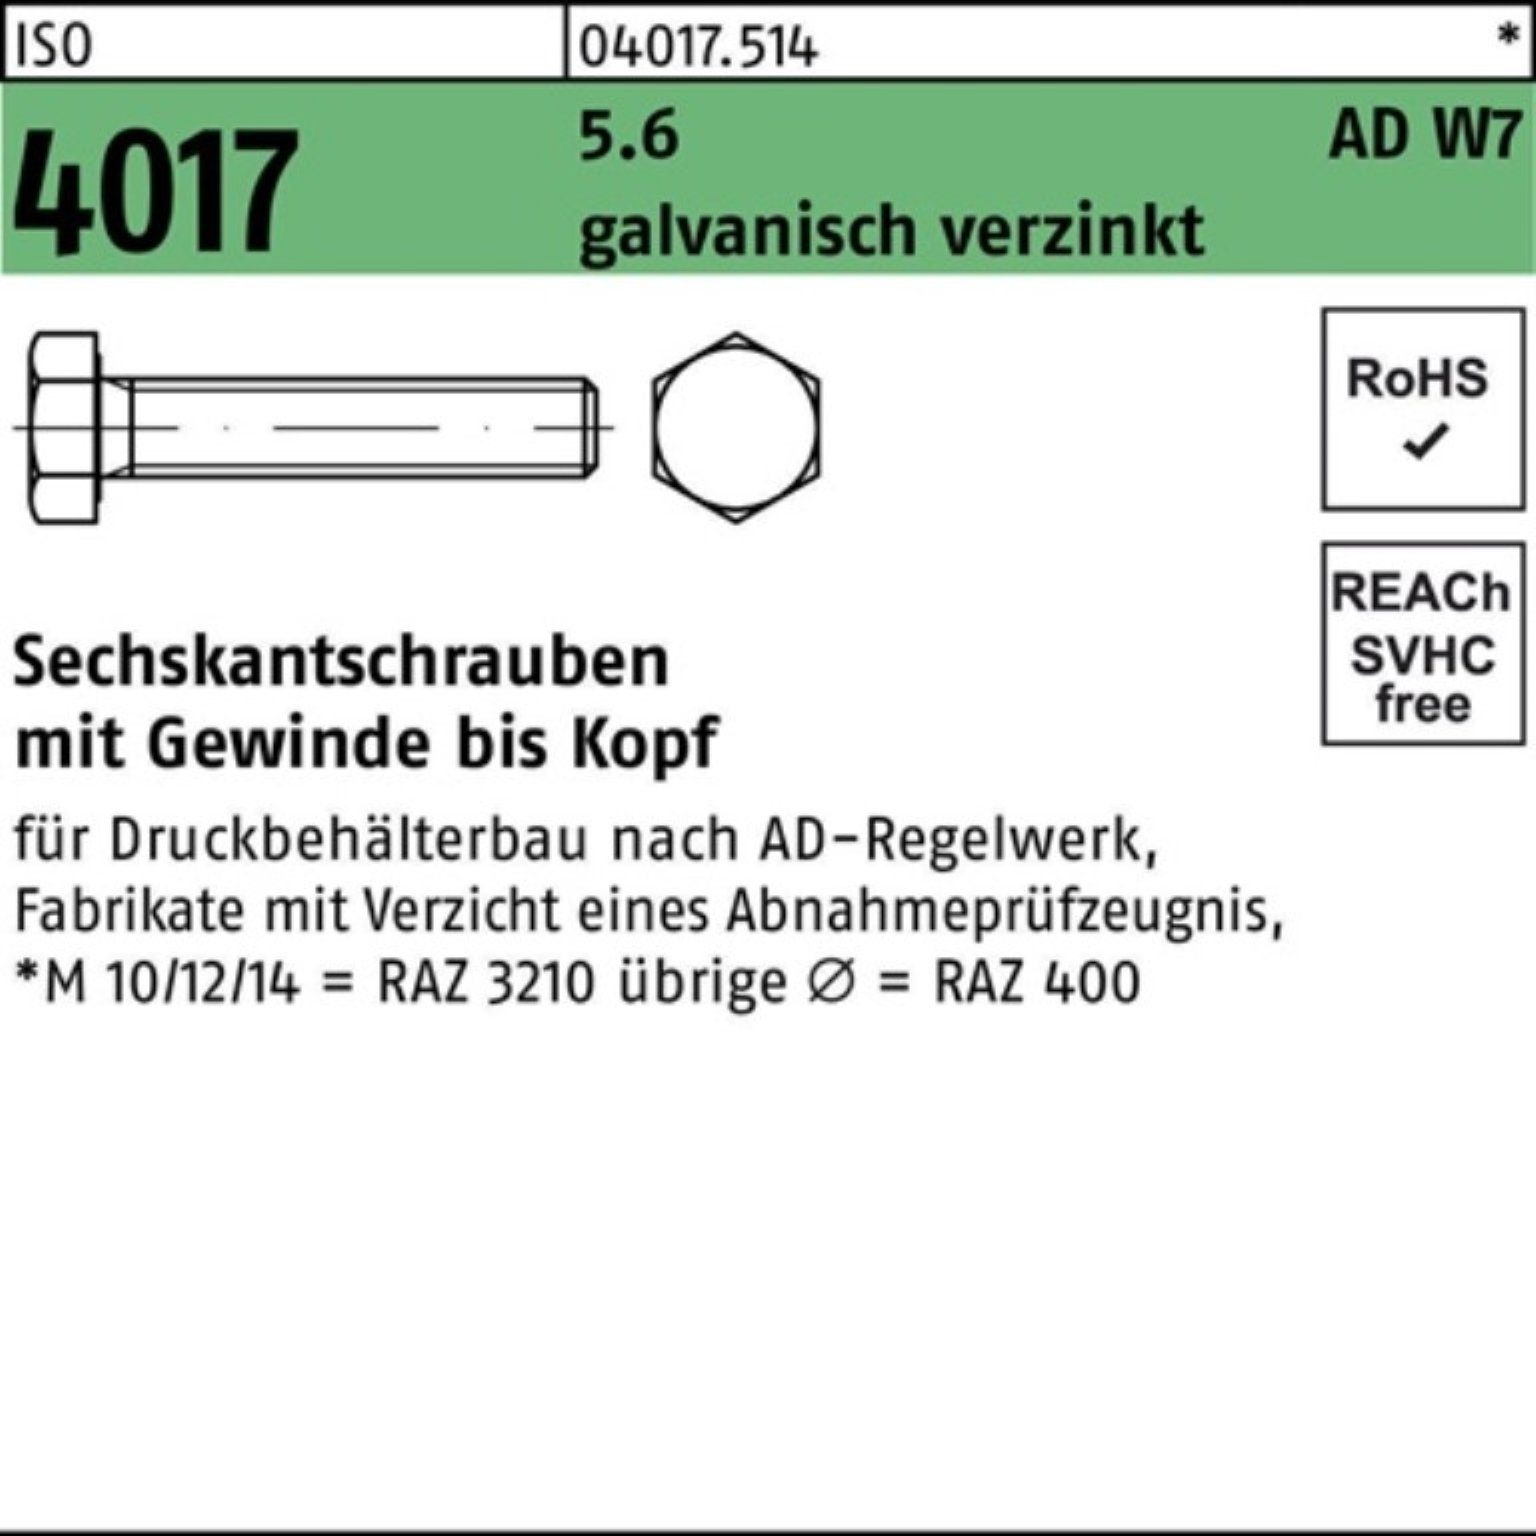 Bufab Sechskantschraube 100er galv.verz. VG 65 5.6 W7 4017 ISO Sechskantschraube Pack AD M30x